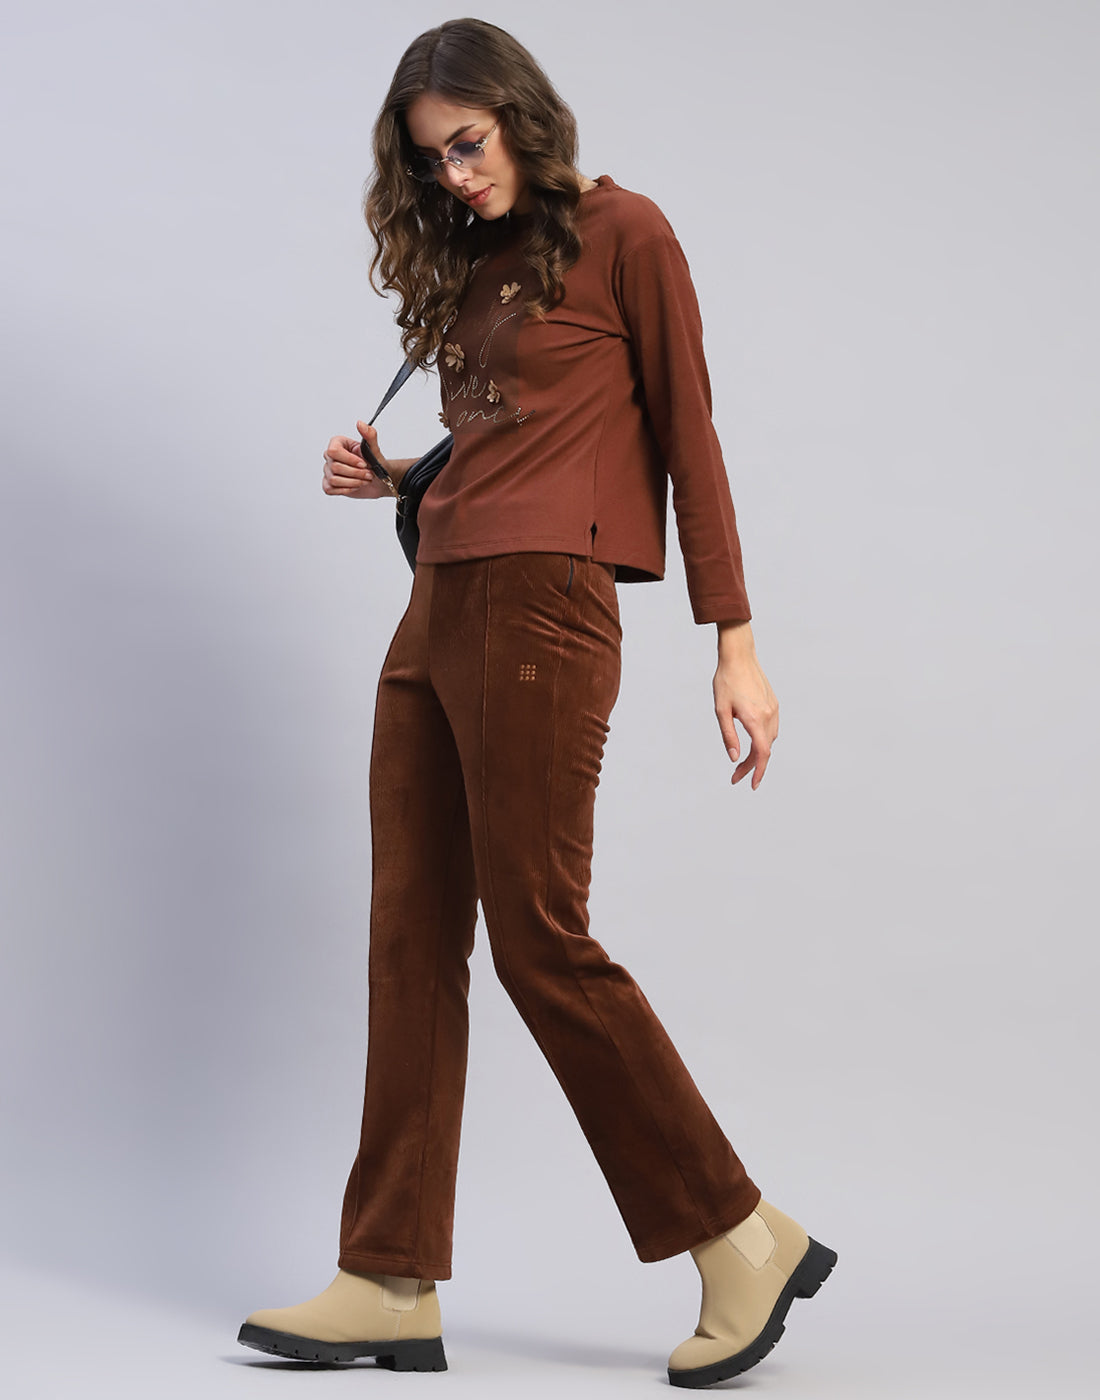 Frankie Burgundy Red Linen Trousers - Linenfox